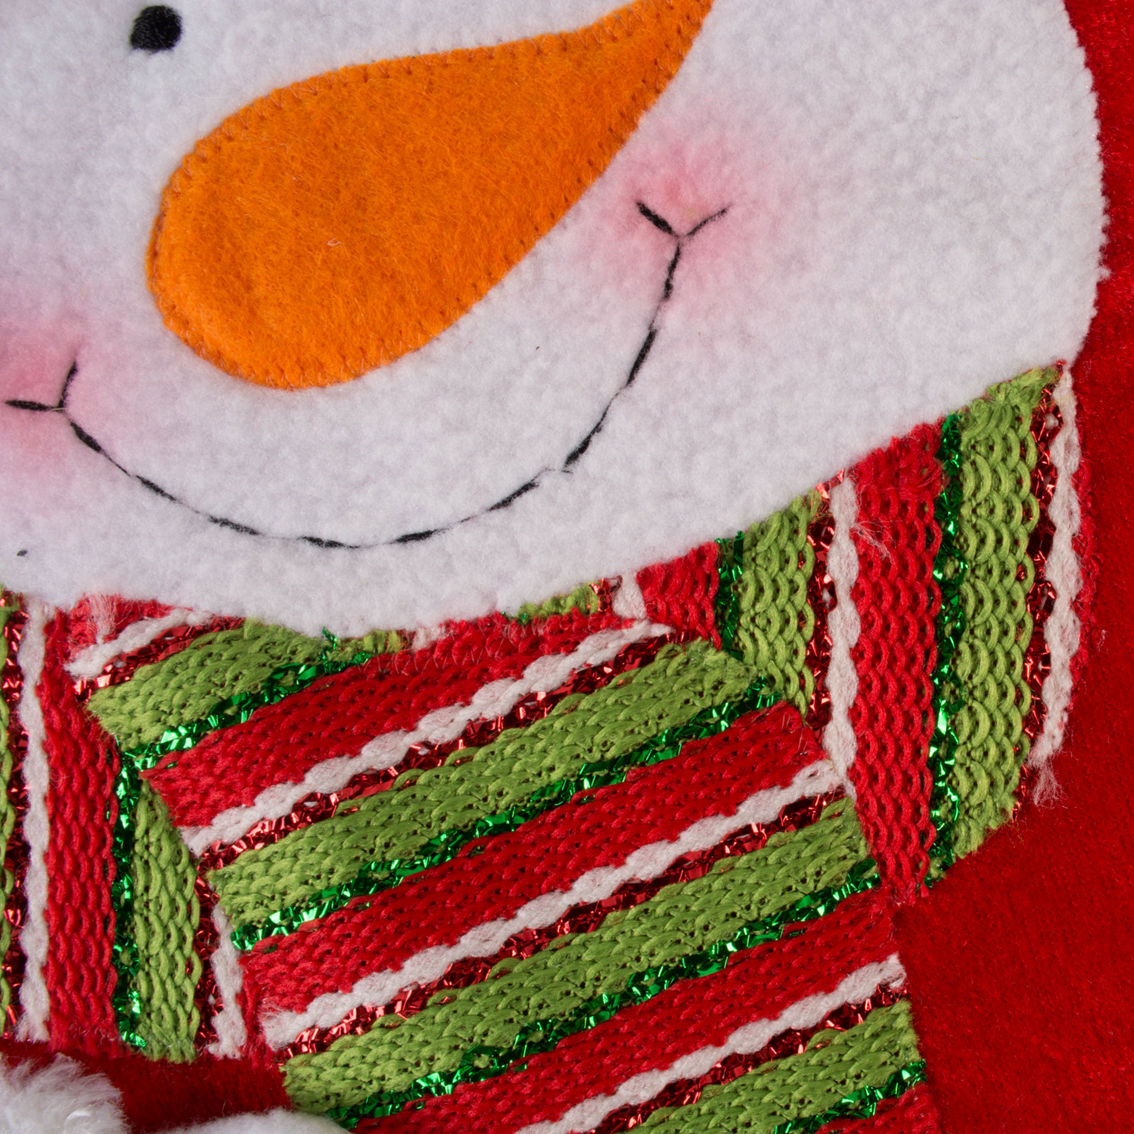 Design Imports Santa and Snowman Stocking 2 pc. Set - Image 5 of 5